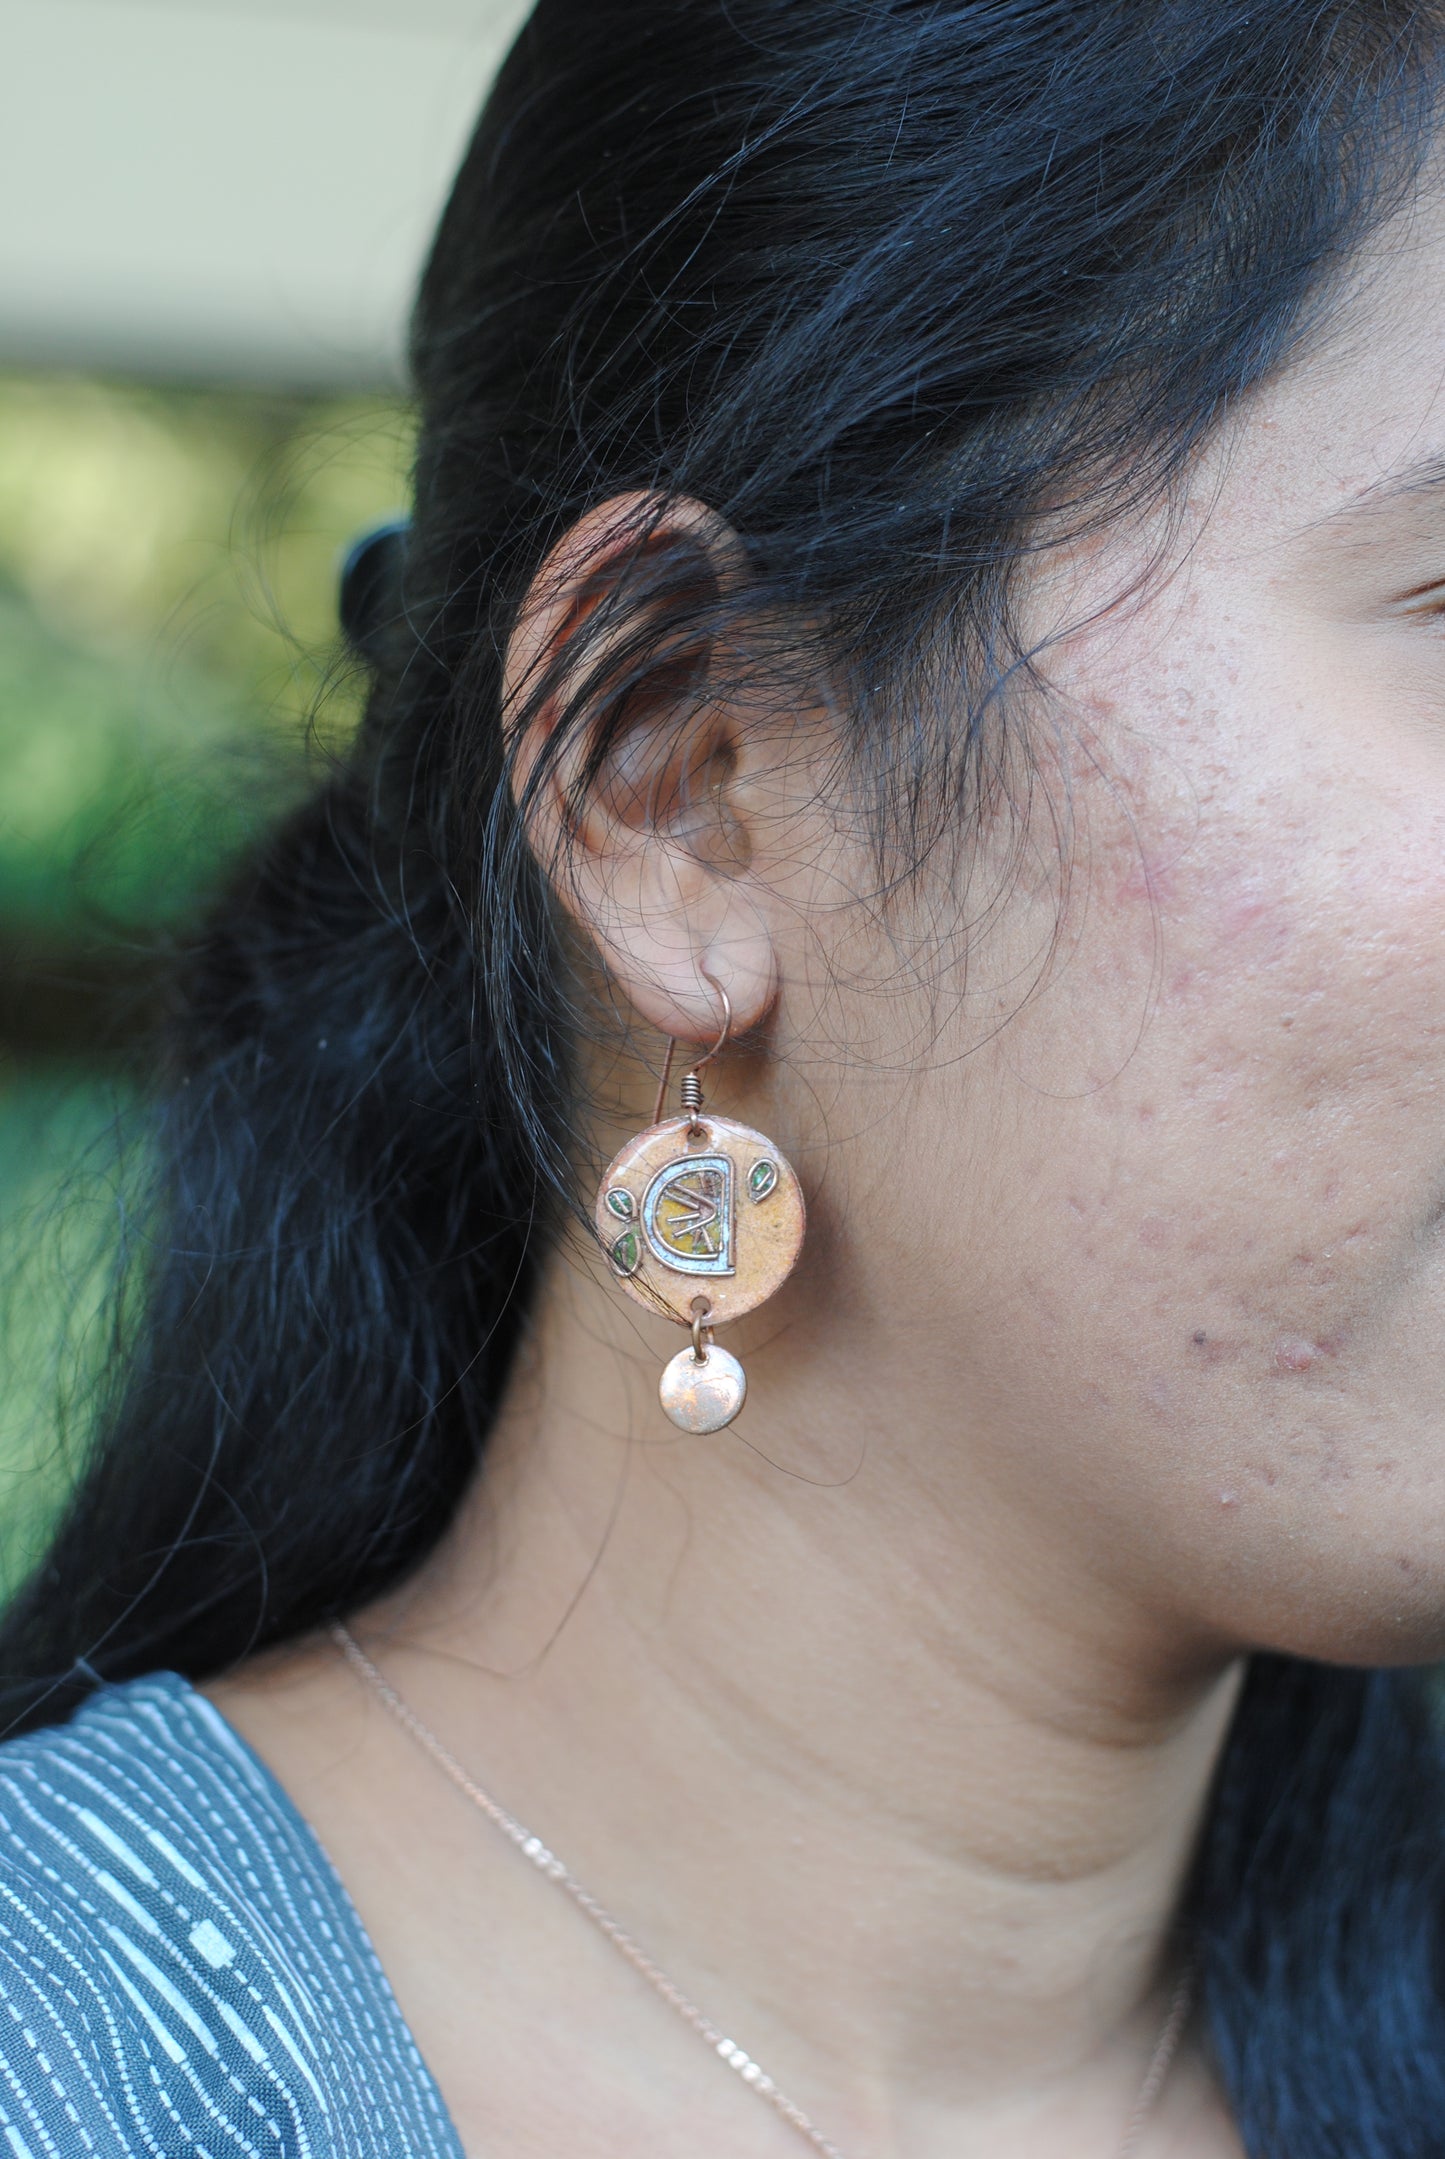 Copper enamel jewelry, funky earrings handcrafted in Maharashtra, India. lemon nimbuzz theme